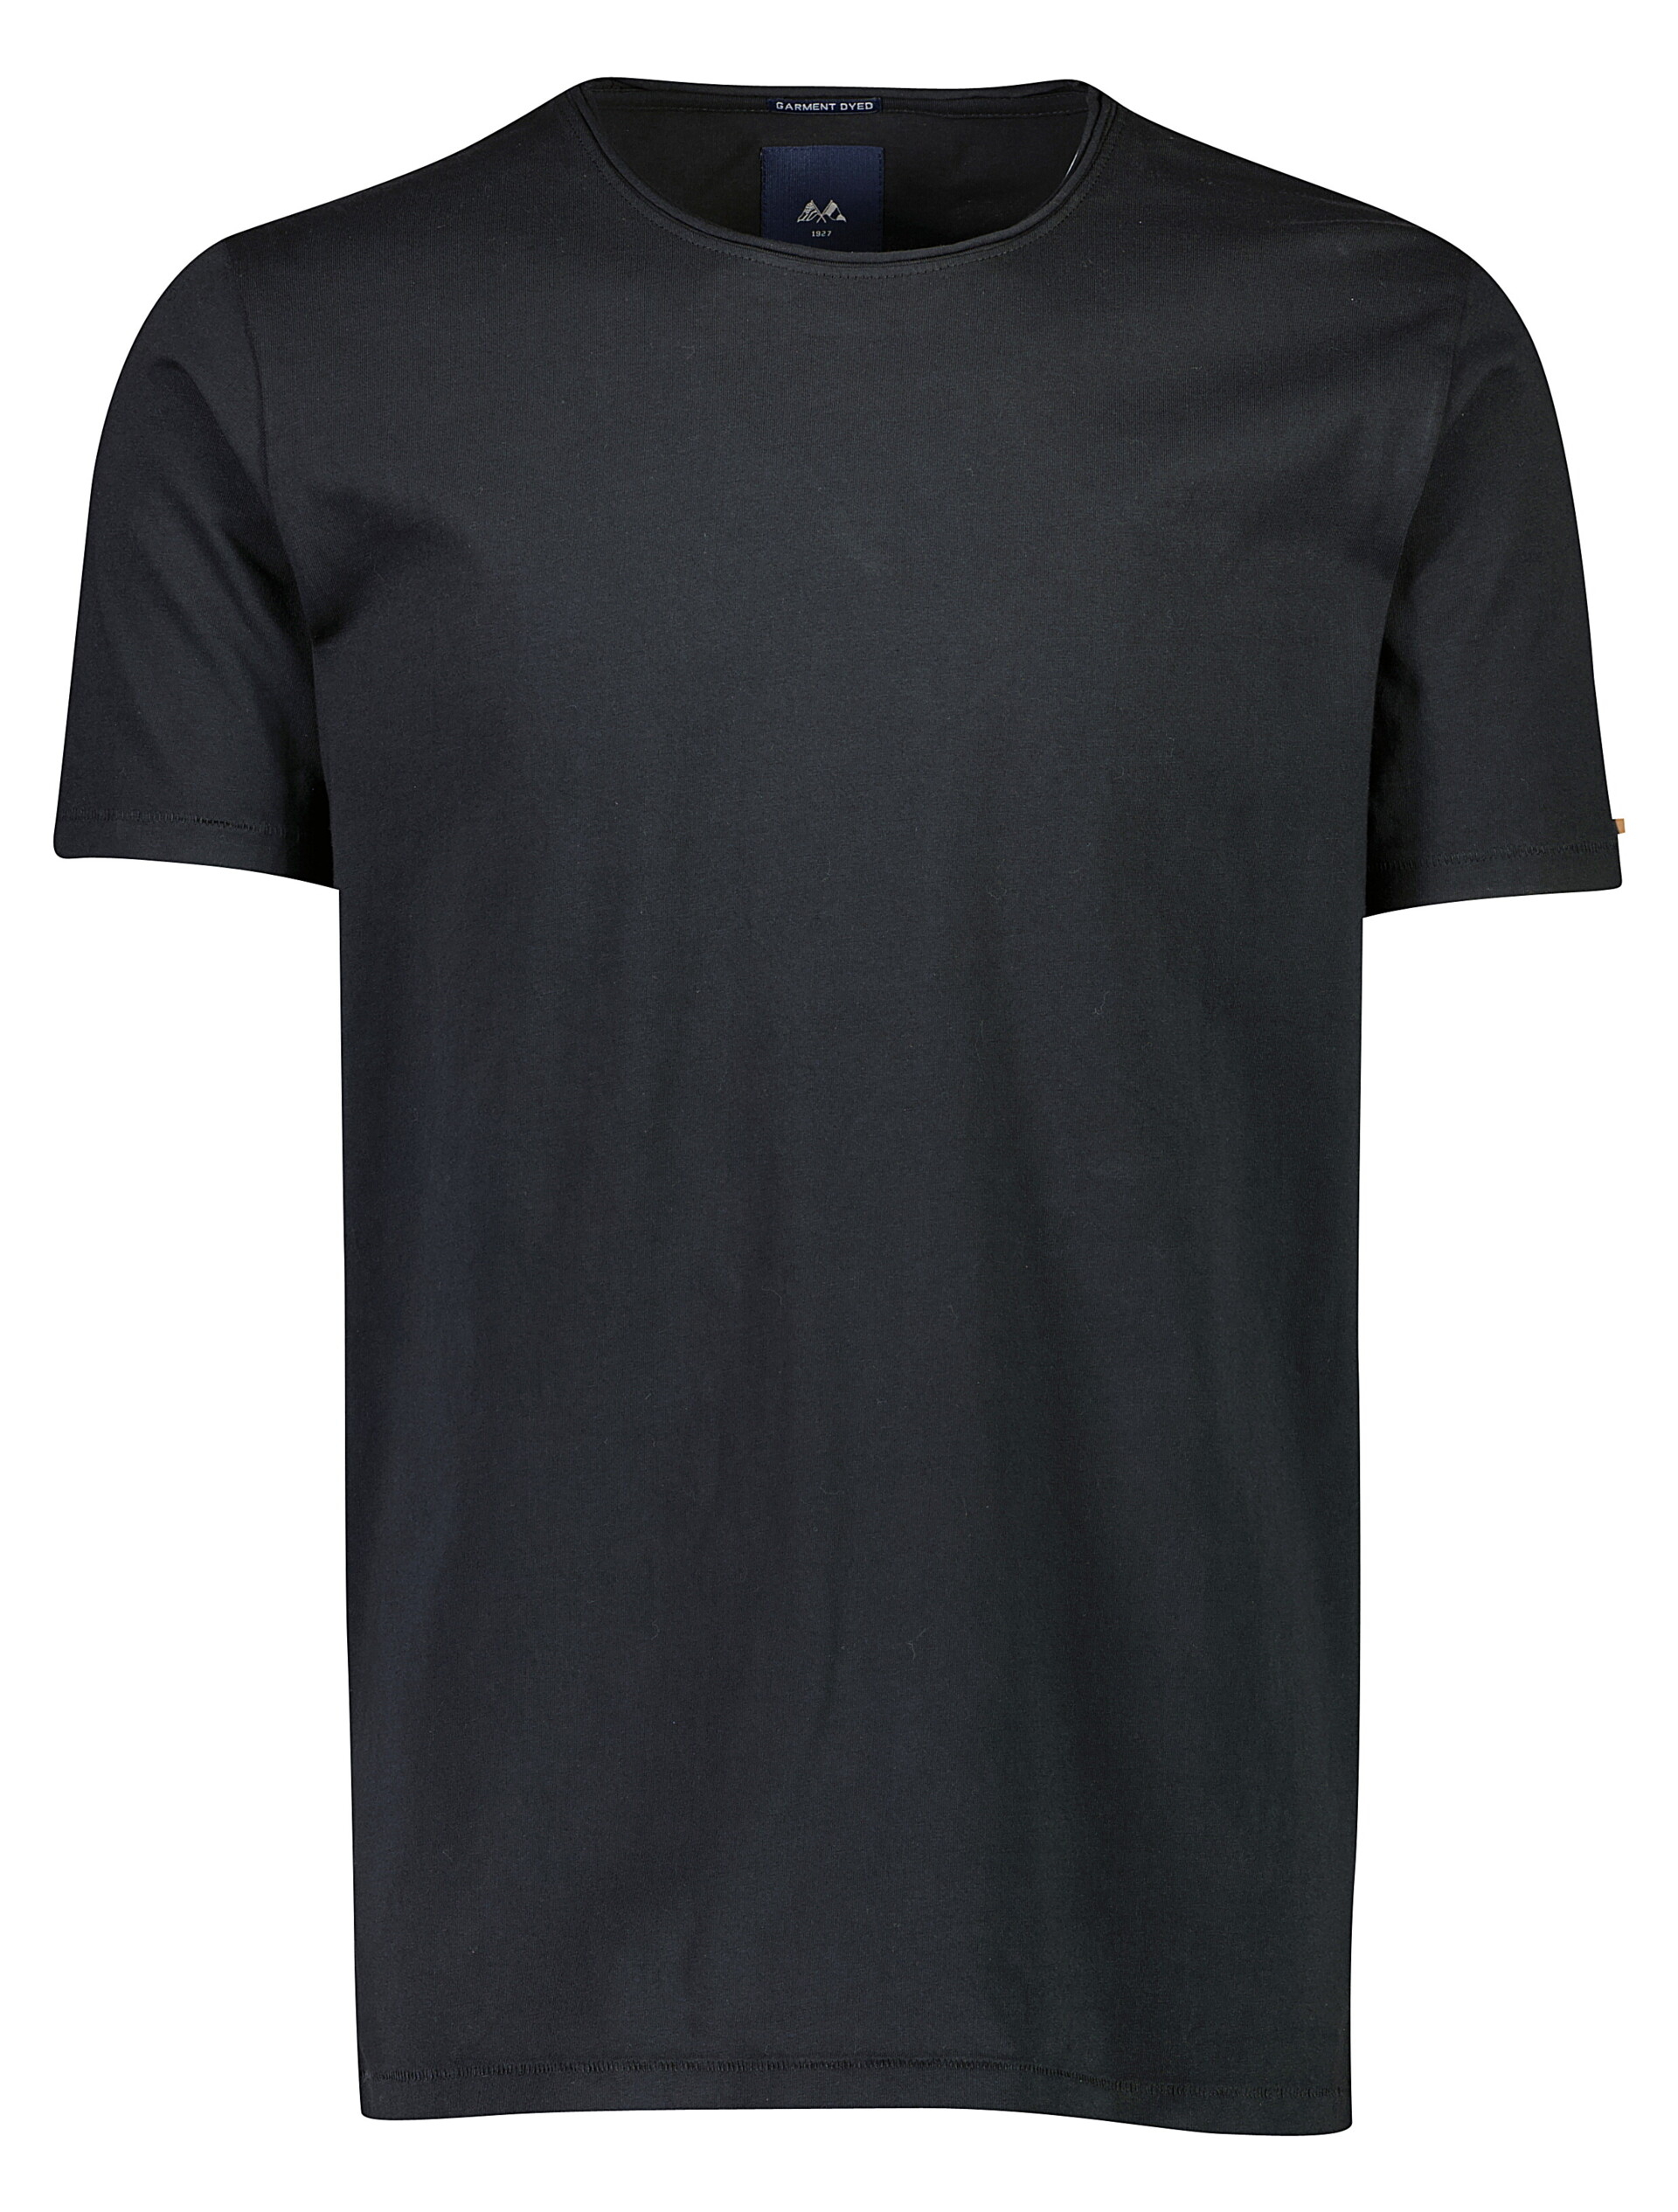 Lindbergh T-shirt schwarz / dusty black